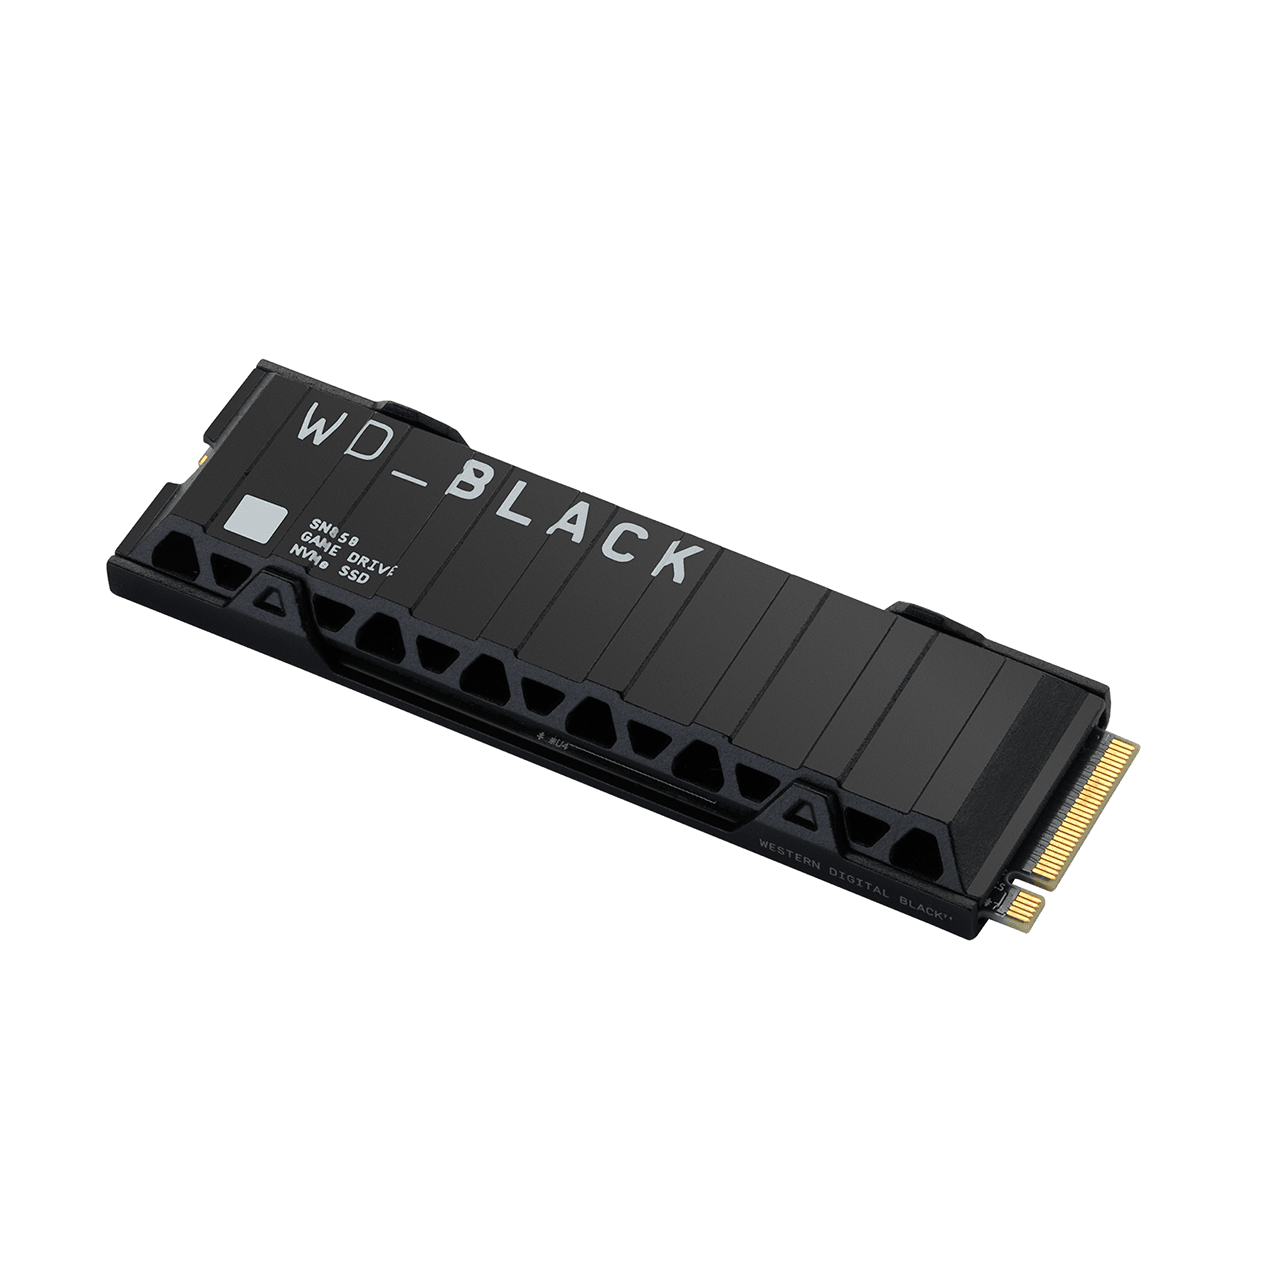 WD_BLACK™ SN850 NVMe™ SSD PCIe® Gen4 for PC or Laptop | Western